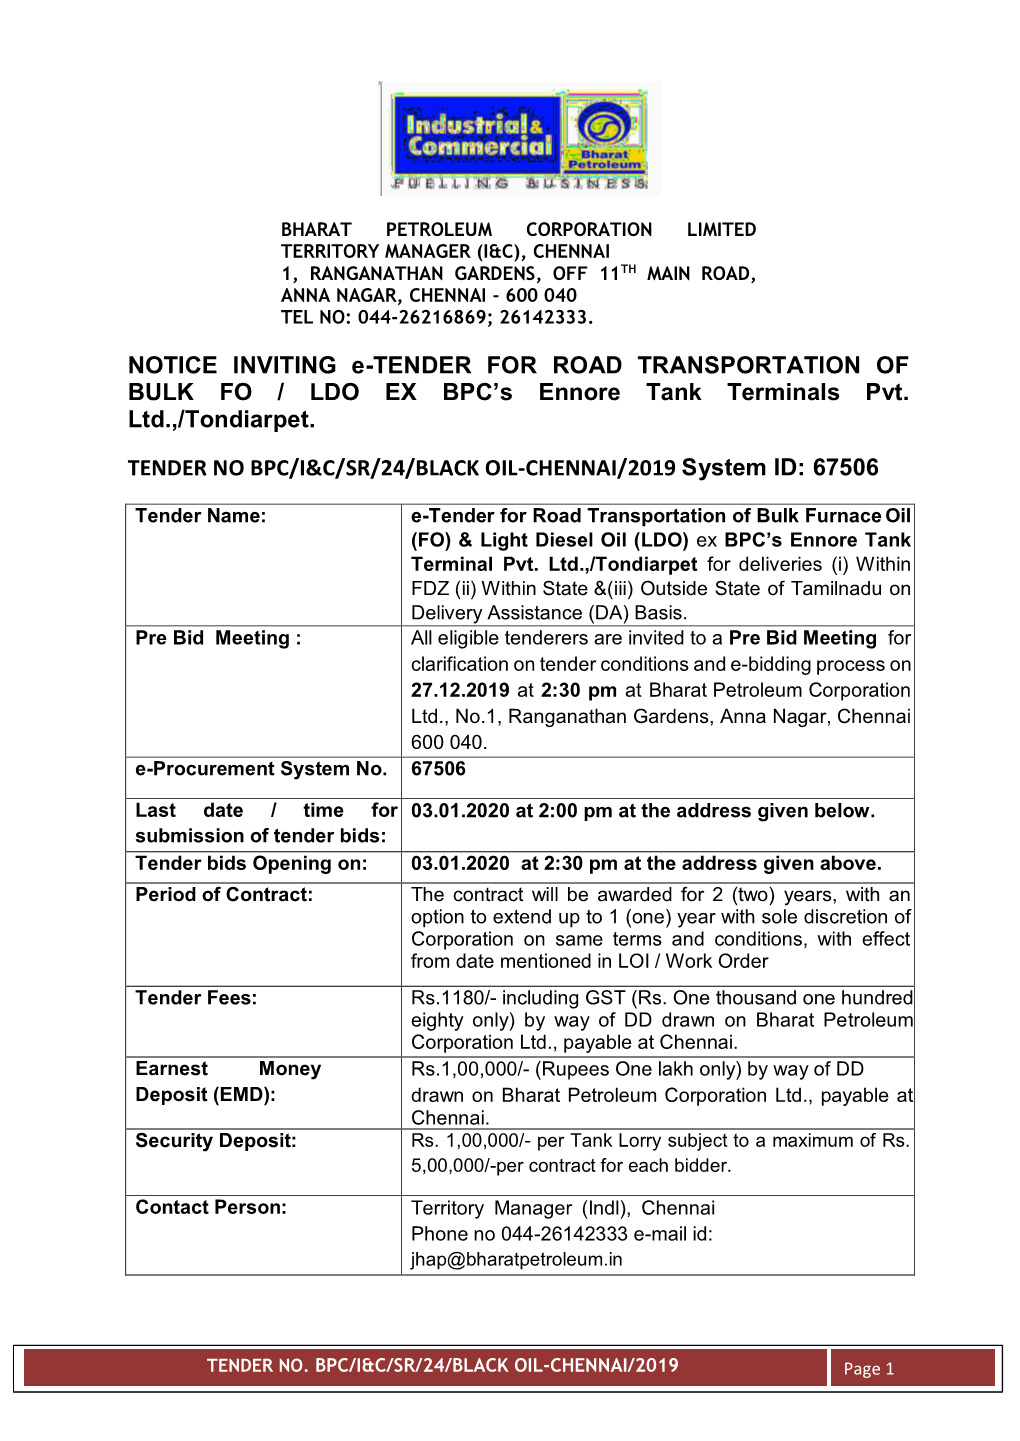 NOTICE INVITING E-TENDER for ROAD TRANSPORTATION of BULK FO / LDO EX BPC’S Ennore Tank Terminals Pvt